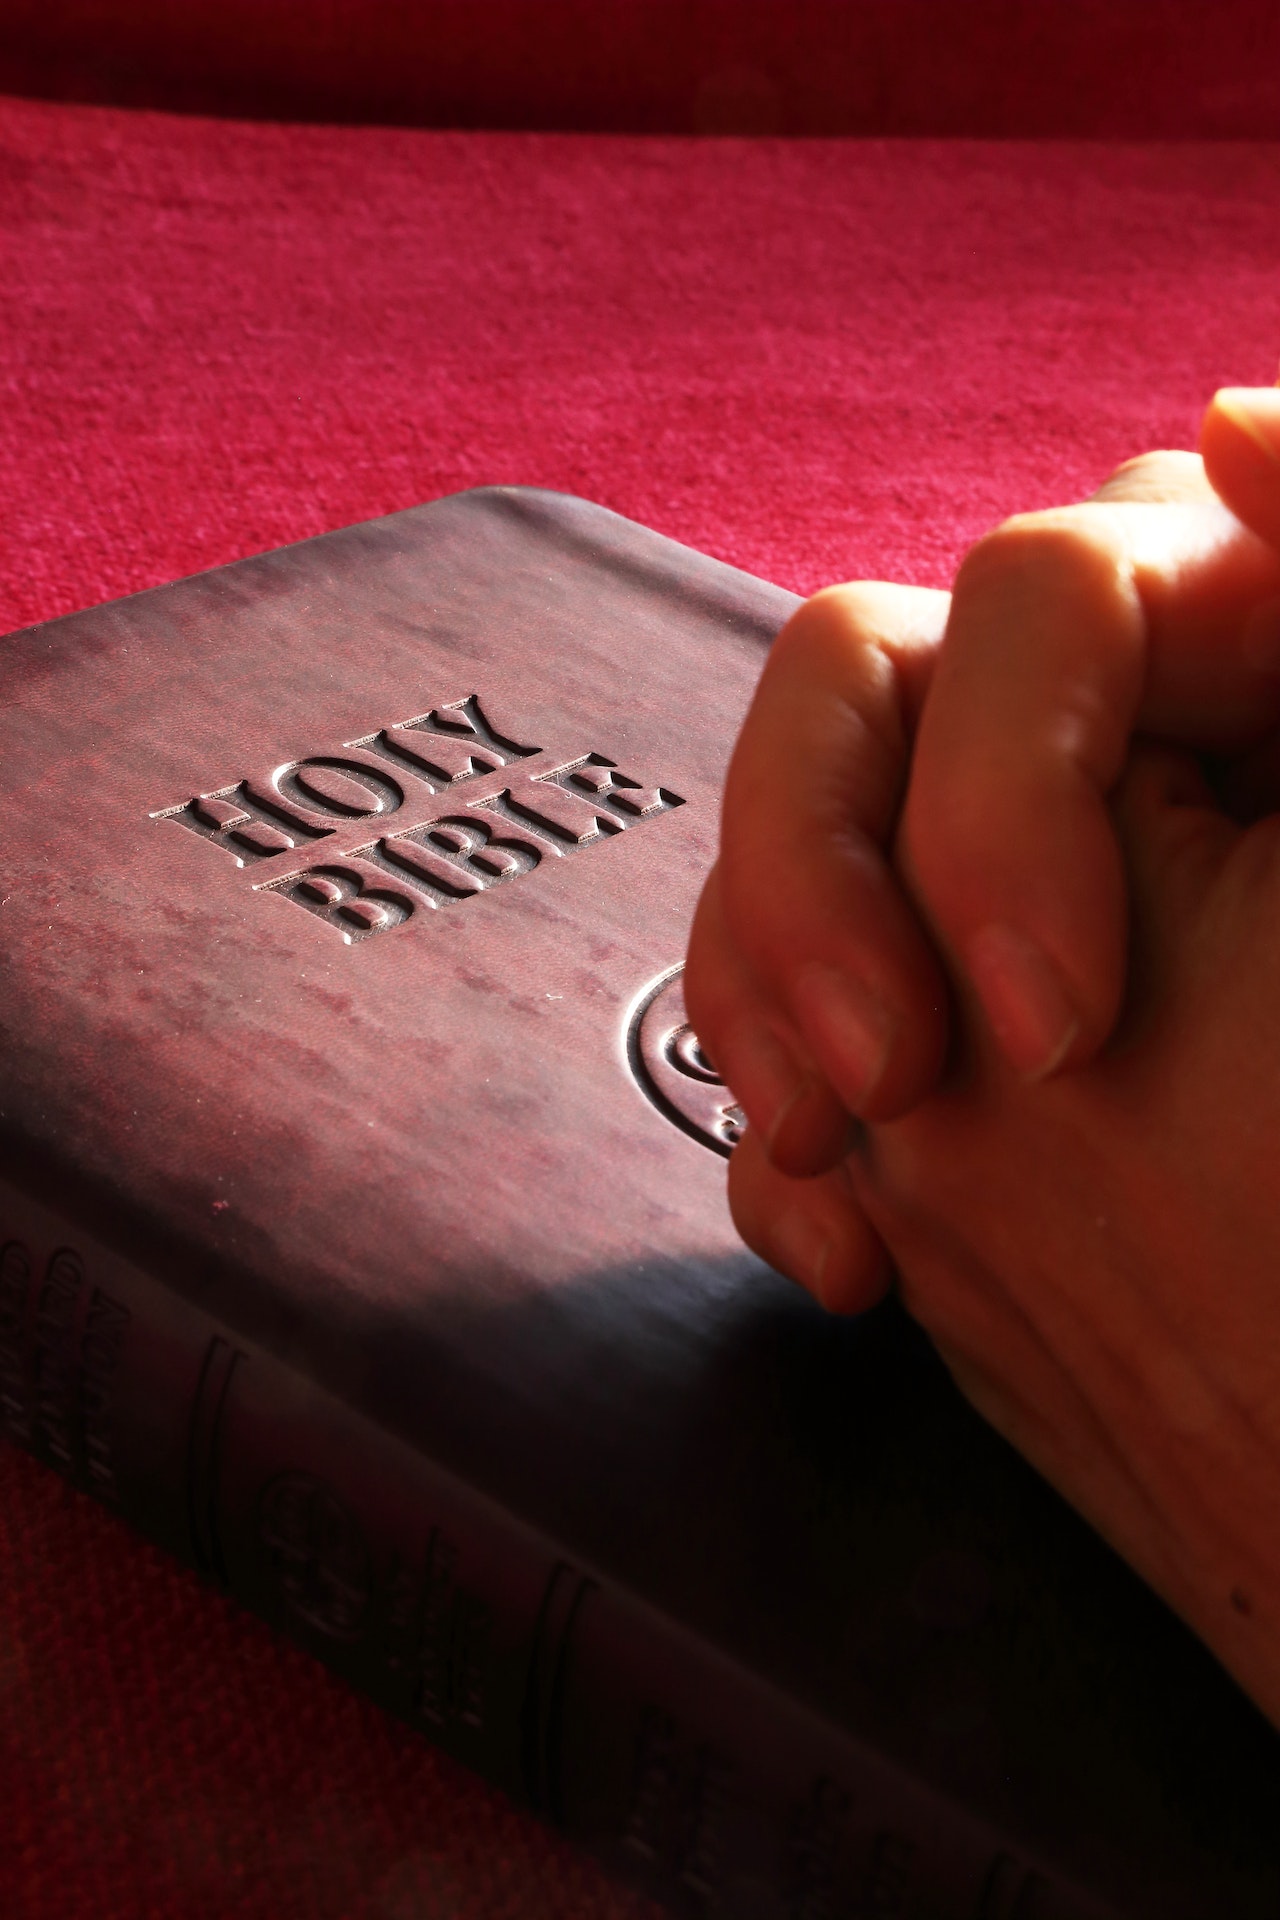 Hands praying over a bible book